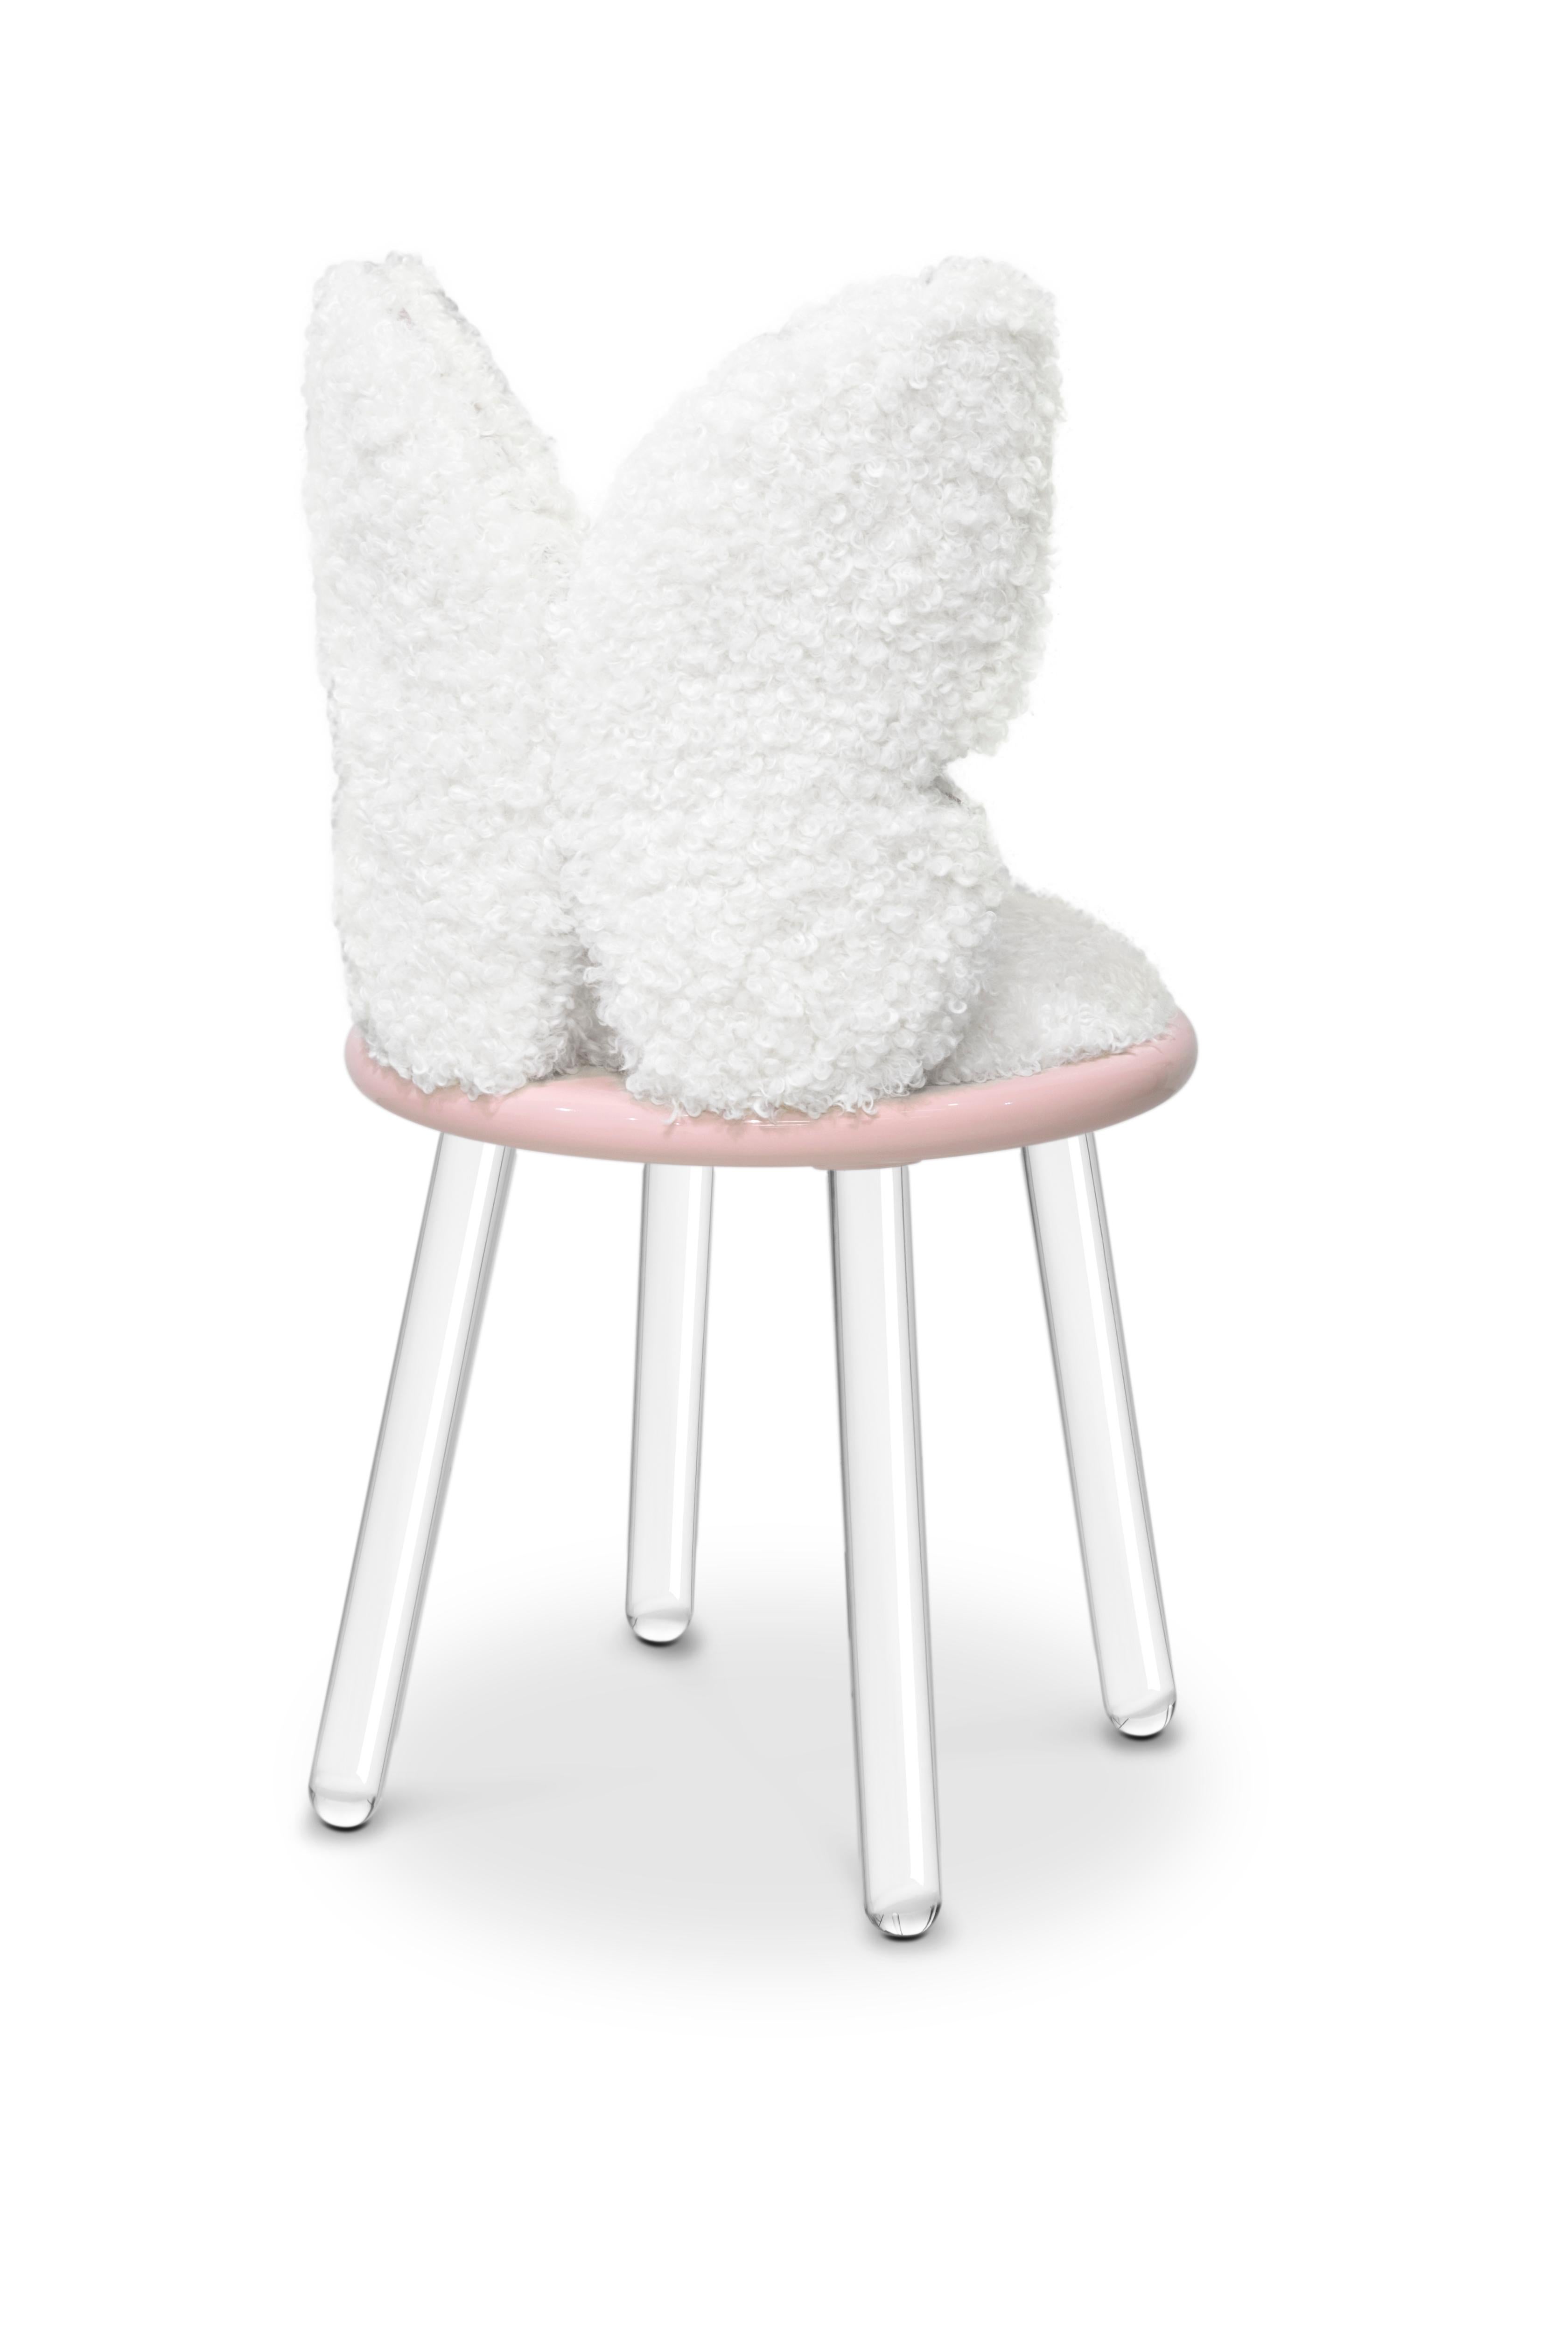 Portuguese Modern Fur Pixie Chair by Circu Magical Furniture For Sale